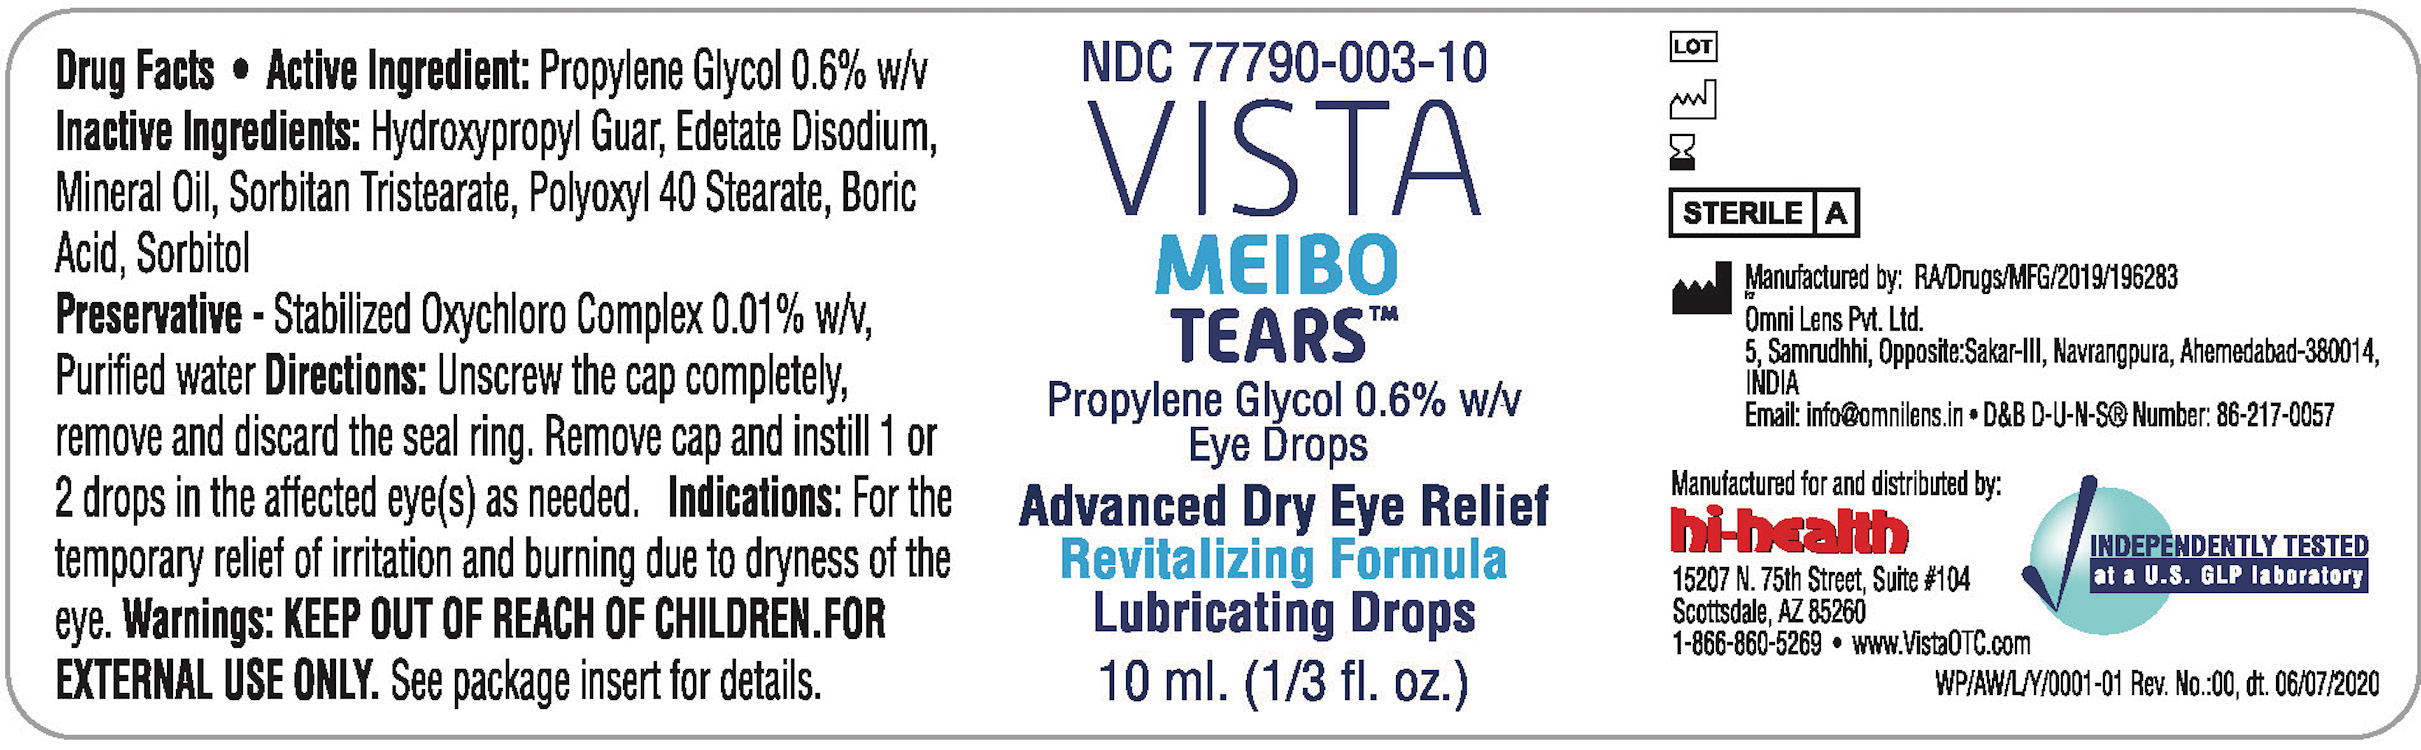 Bottle Label for Vista Meibo Tears